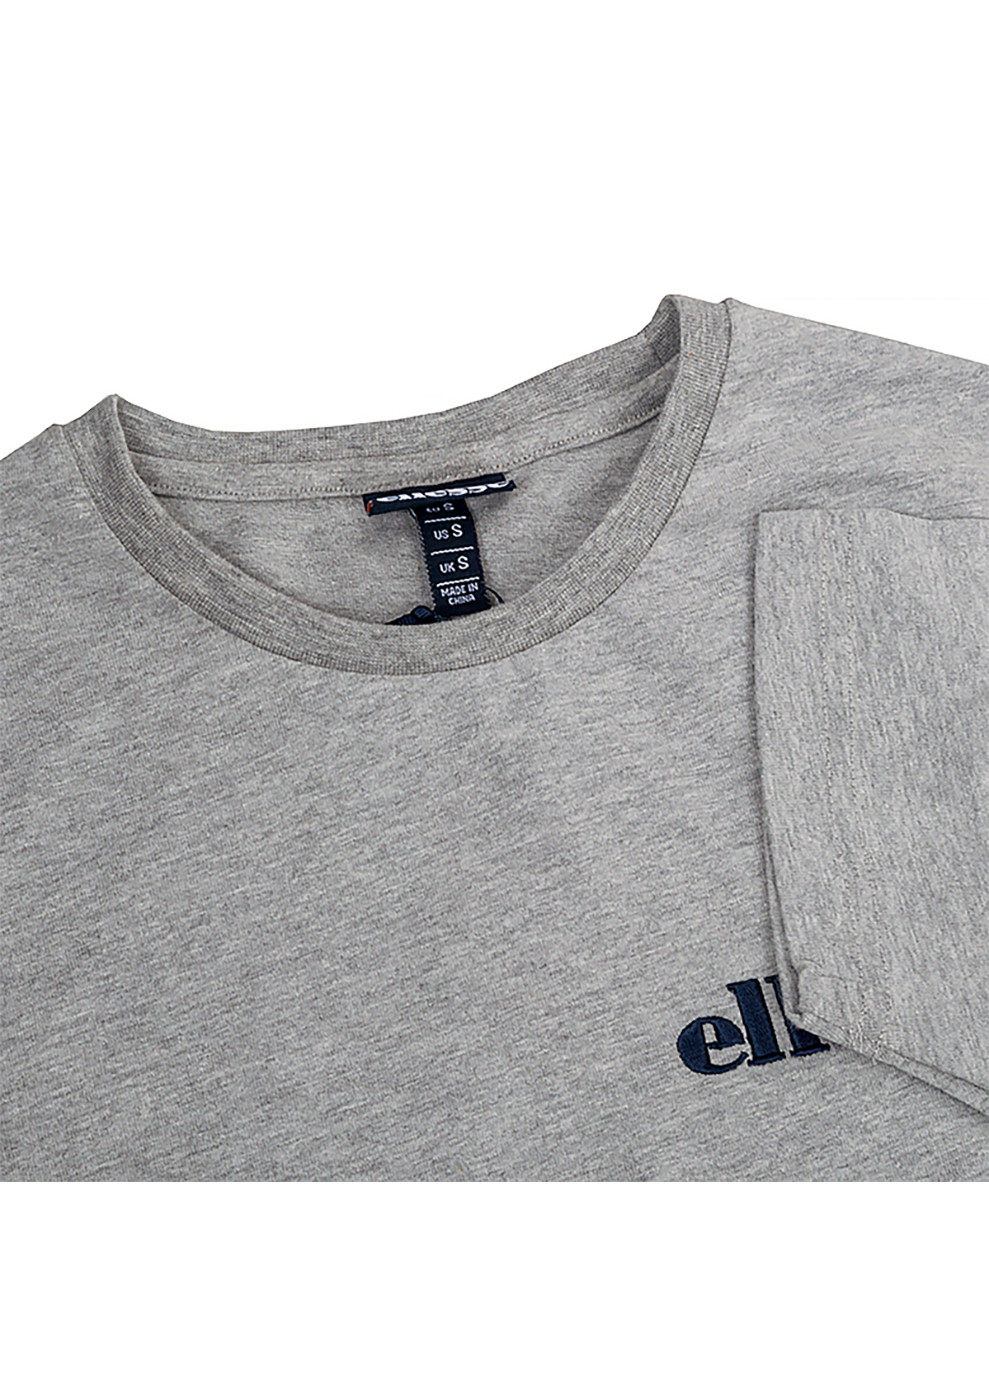 Серая мужская футболка voodoo серый 2xl (shb06835-grey-marl 2xl) Ellesse